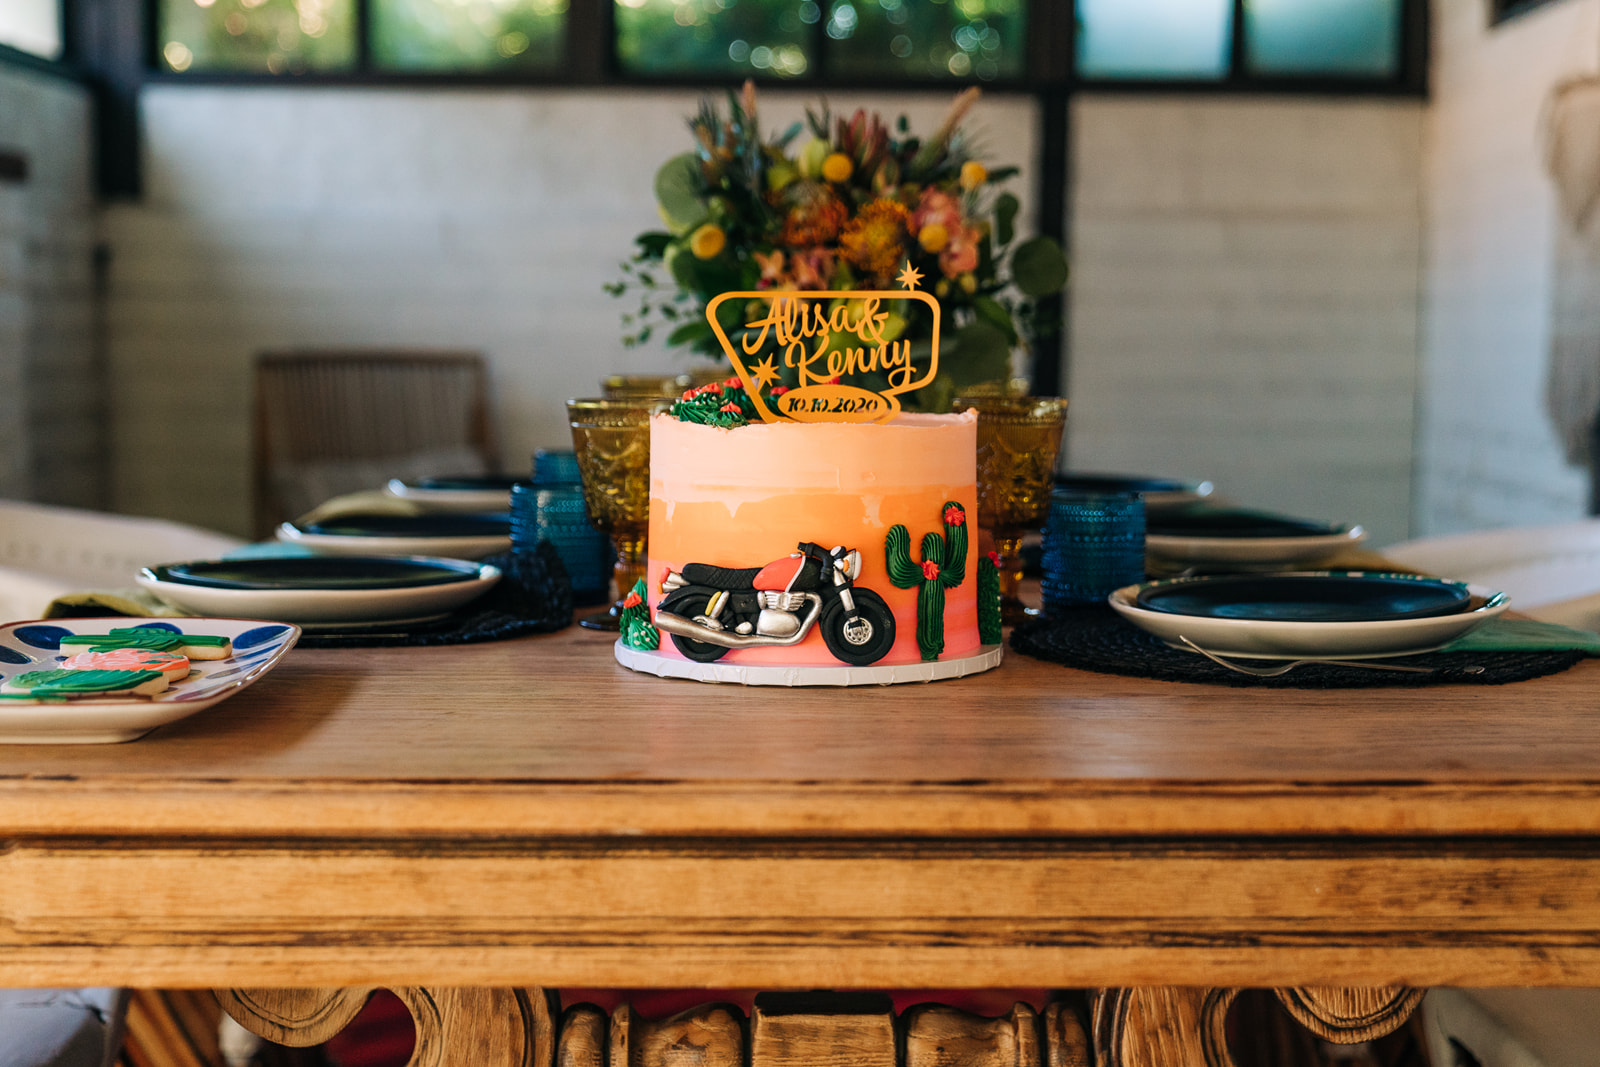 Wedding cake at table